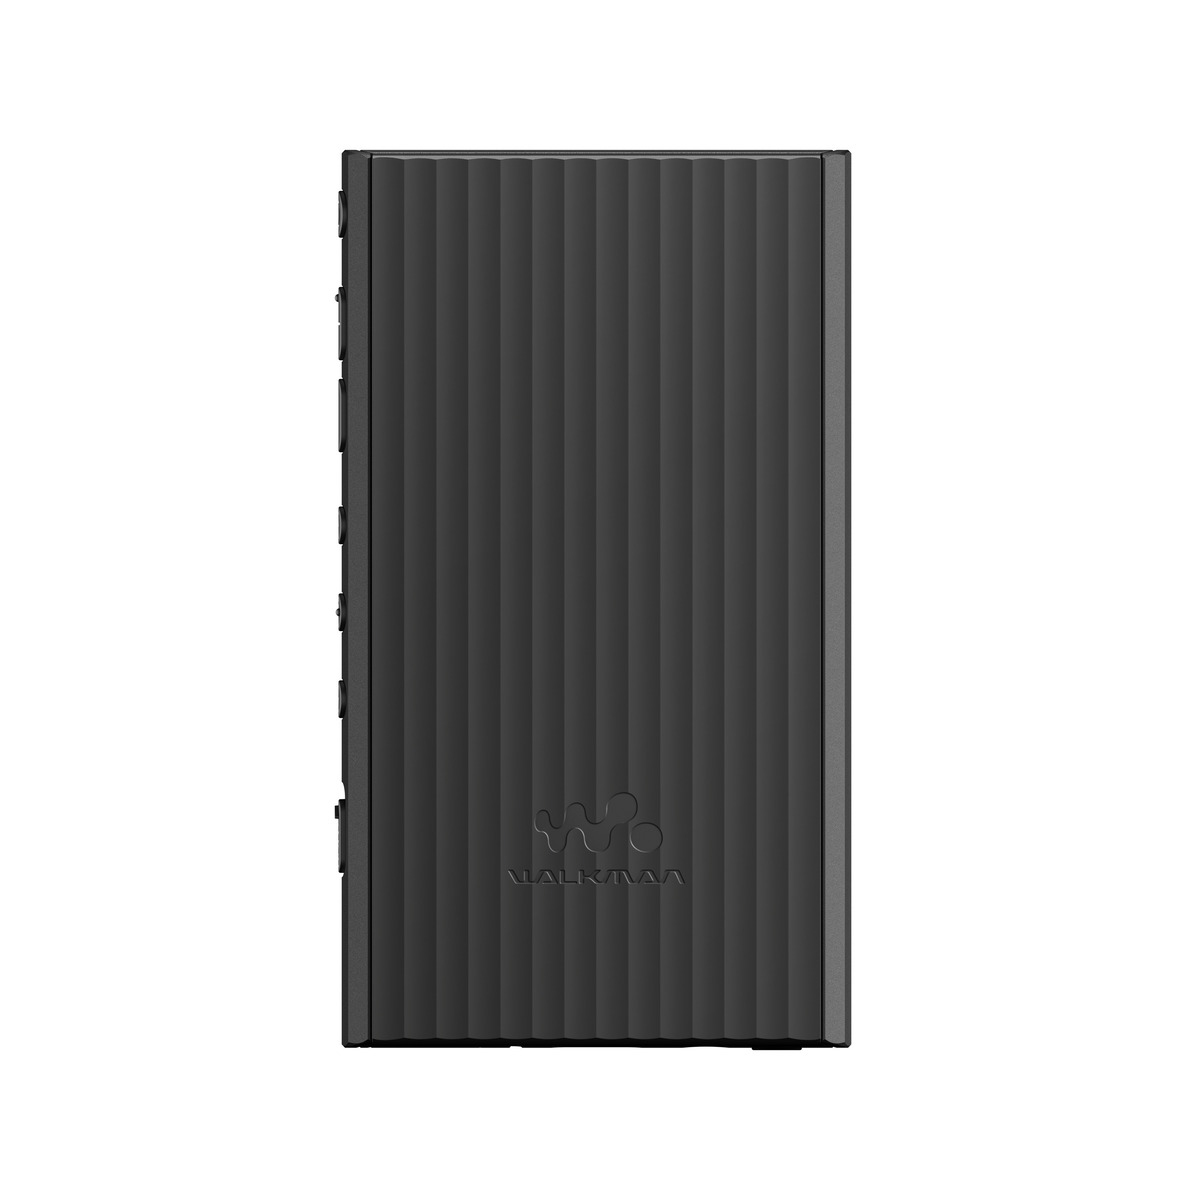 NW-A306 高解析音質 Walkman 背面圖式